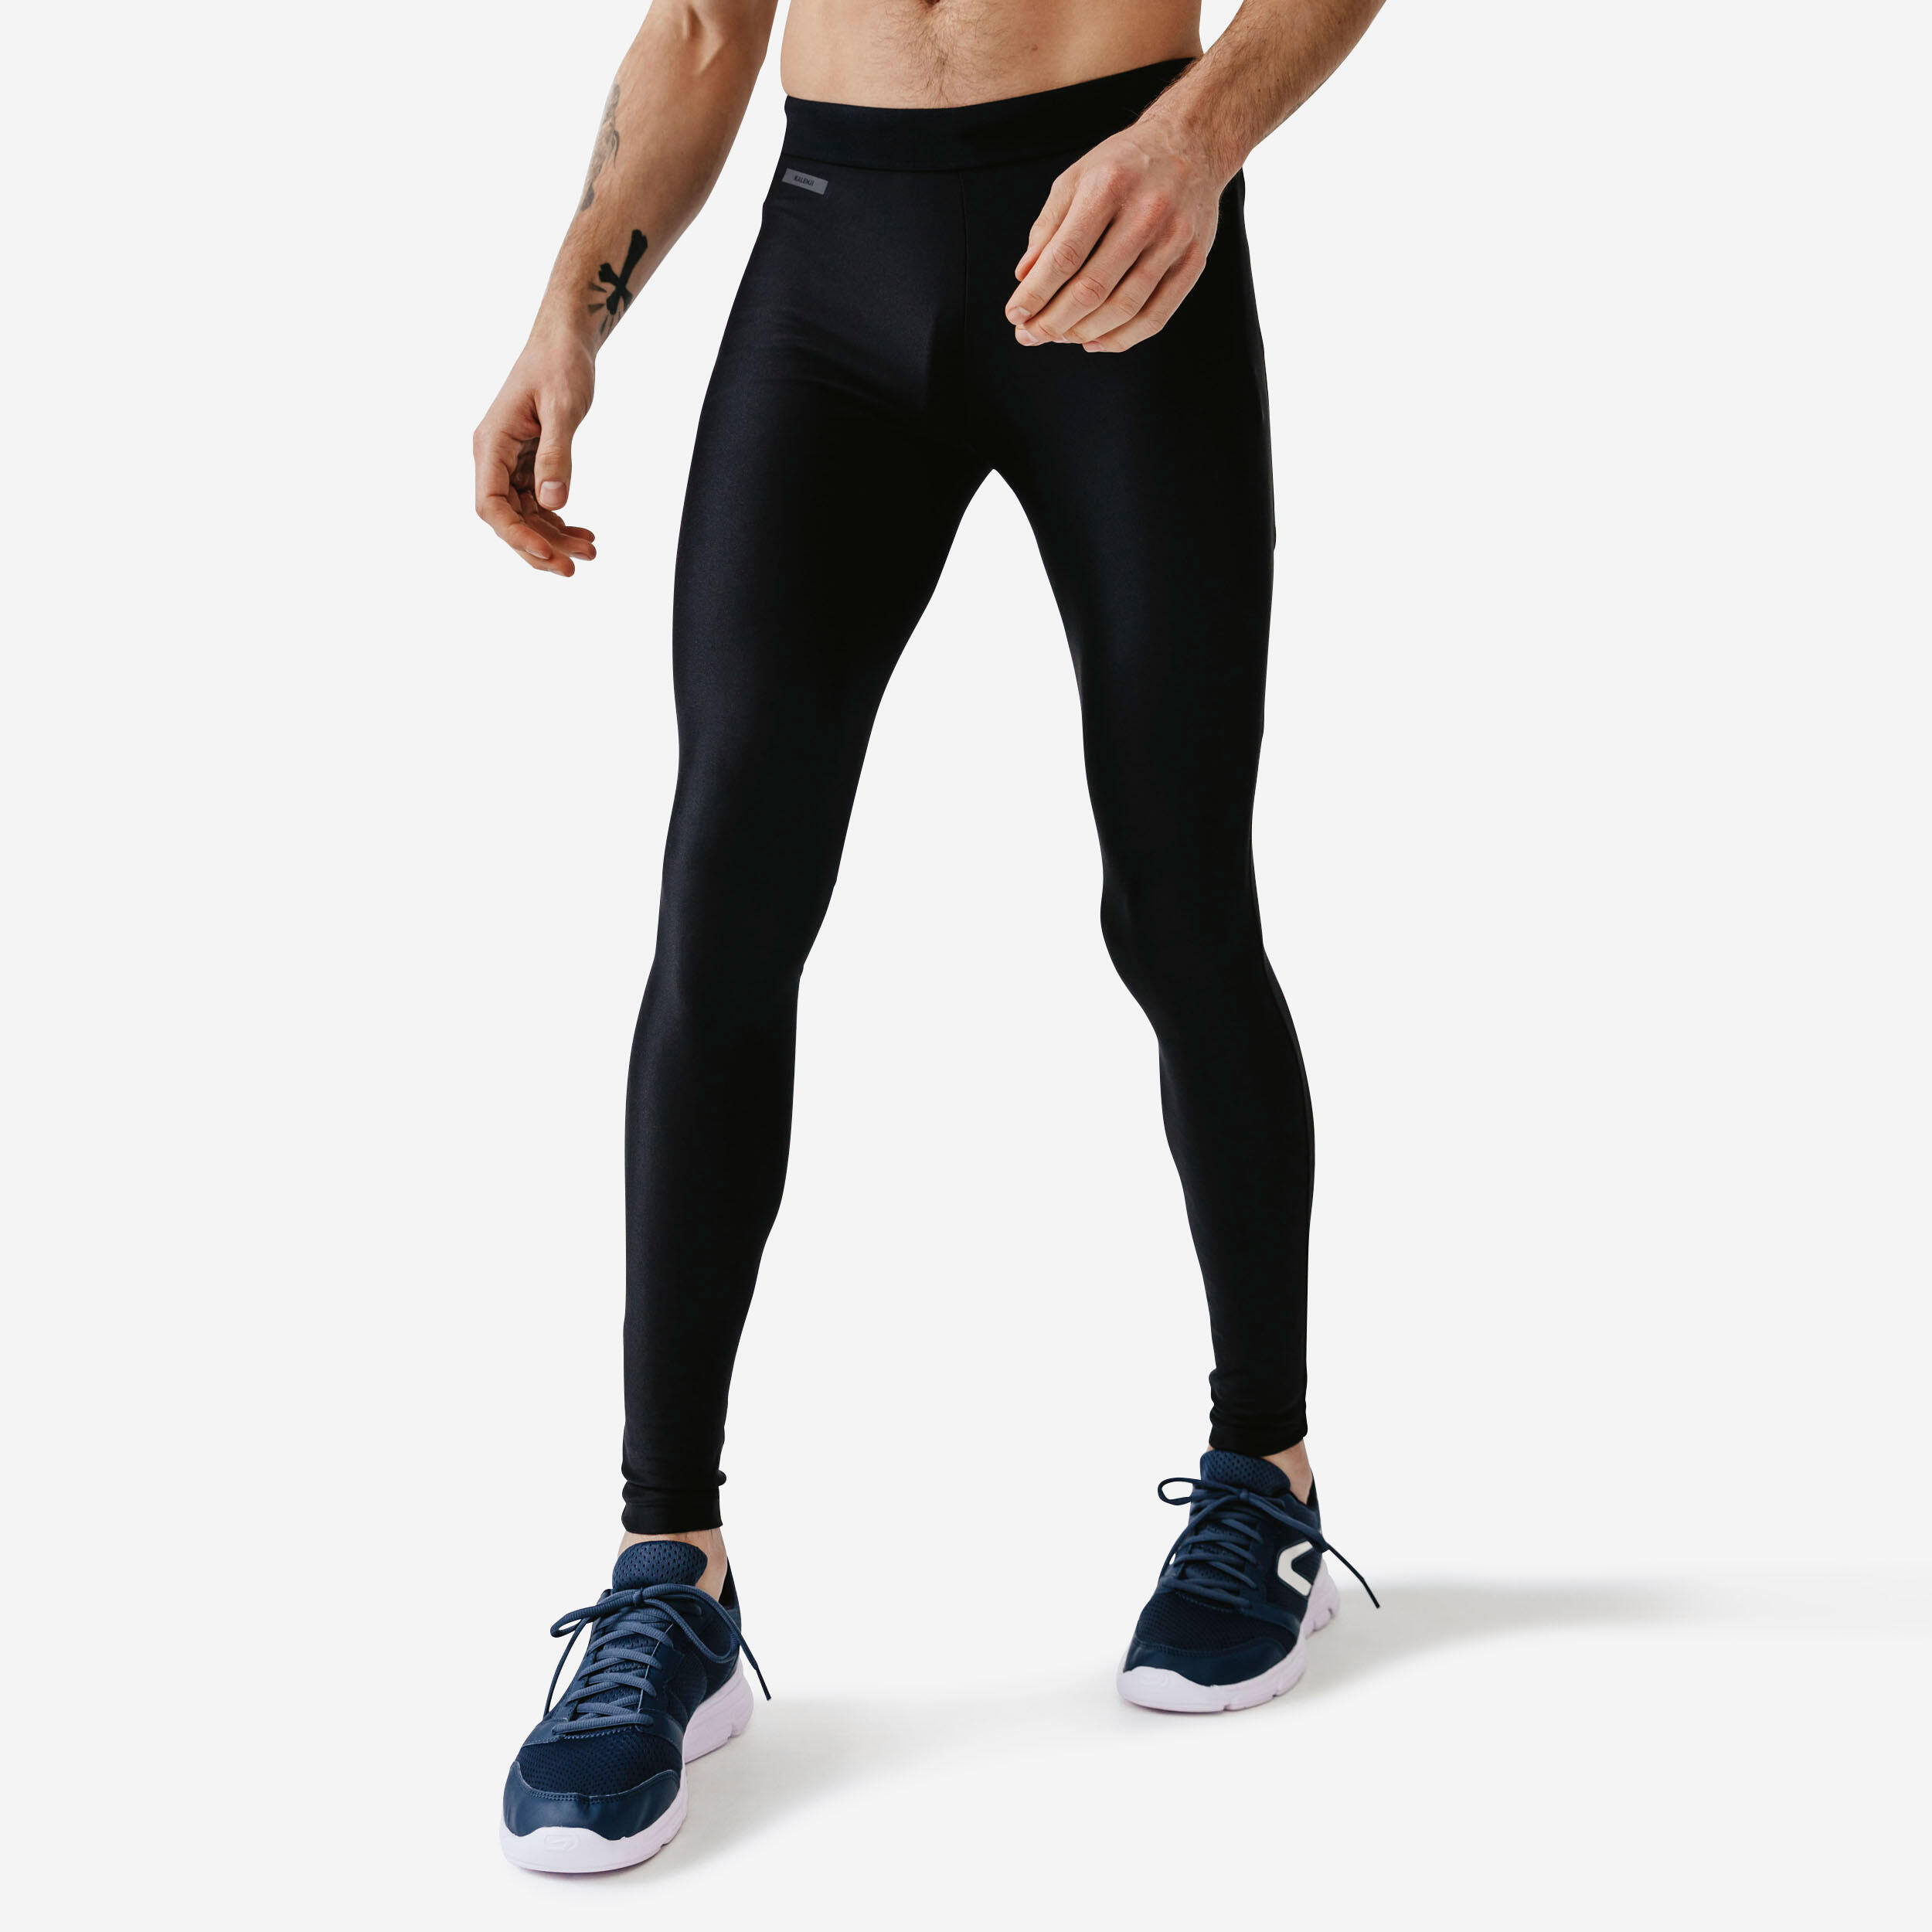 Quick Drying Compression Leggings For Men Full Length Running